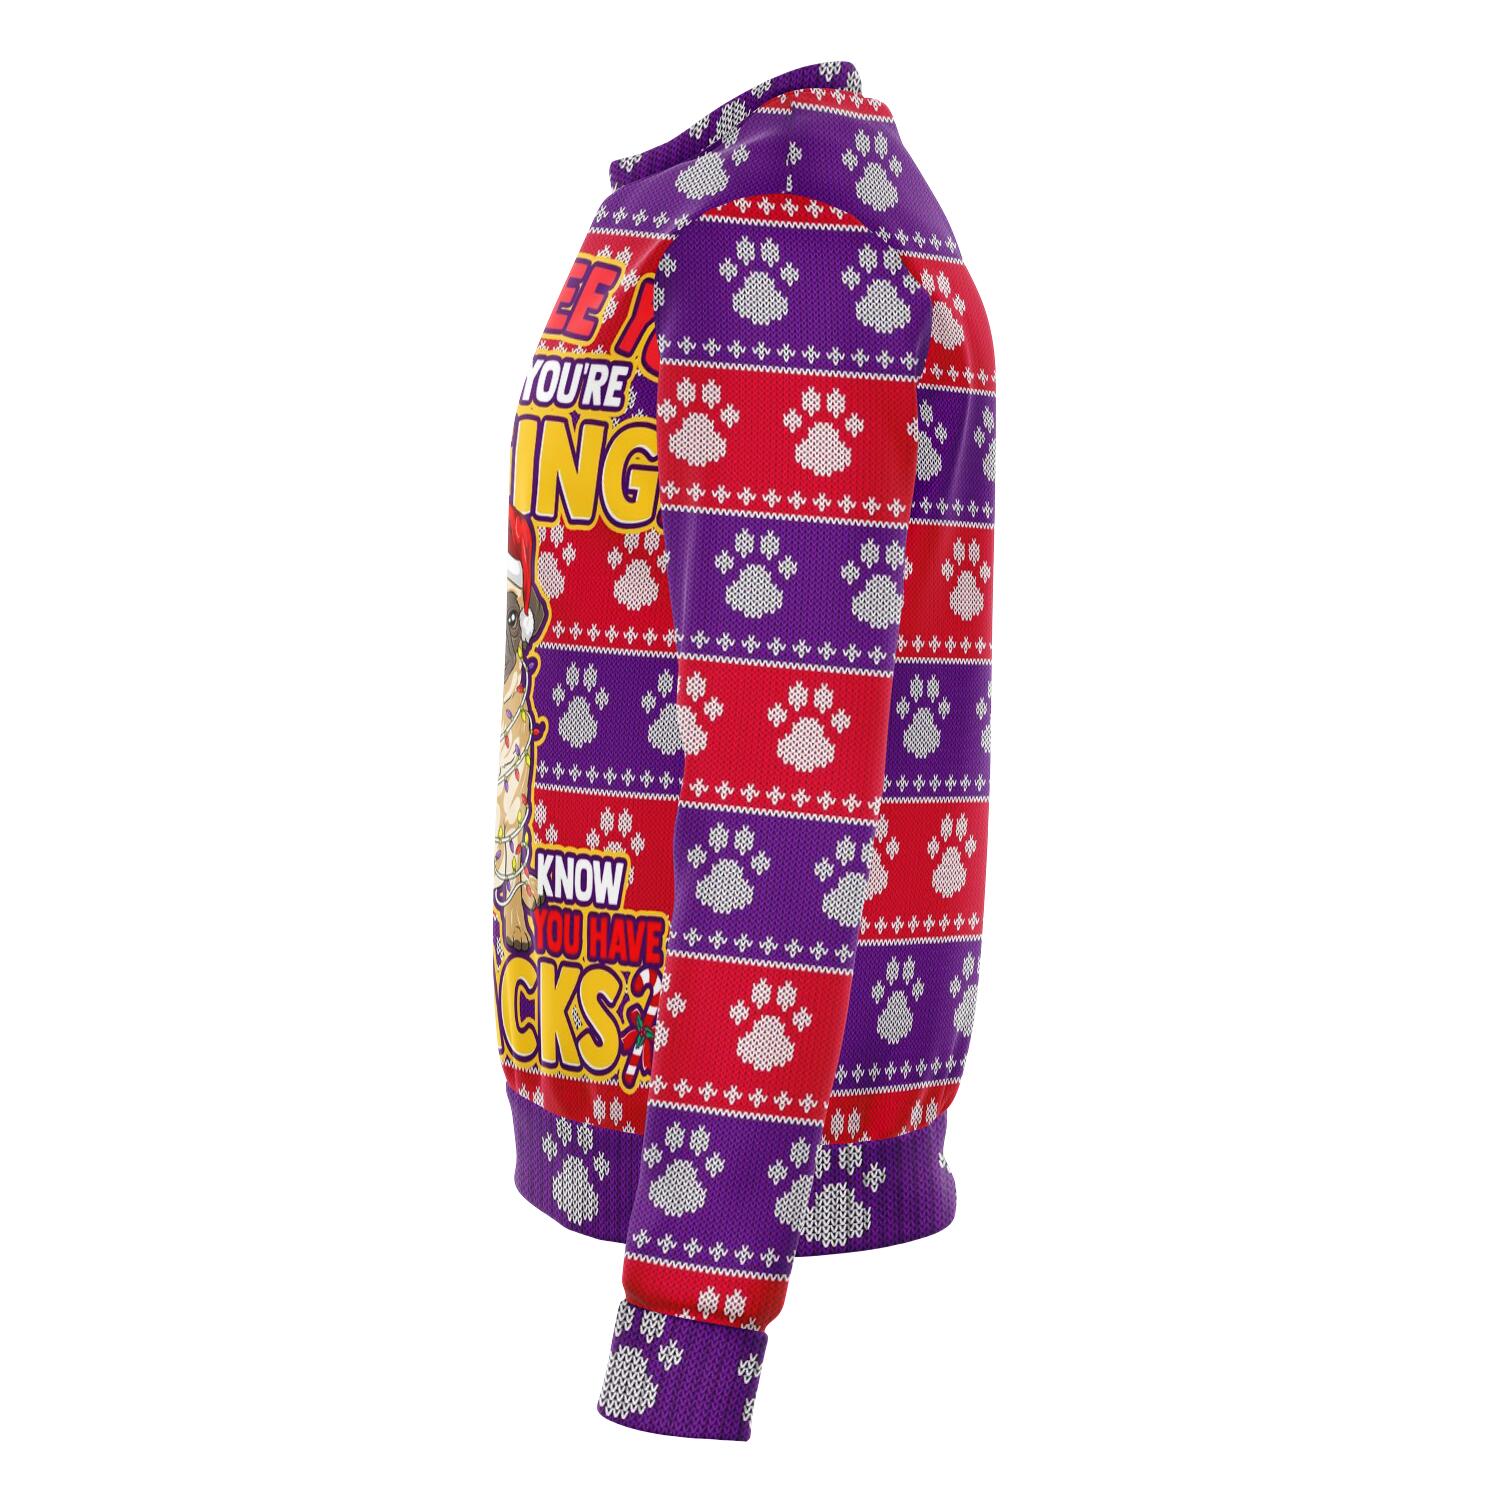 Pug - They Know When You Have Snacks Christmas Crewneck Sweatshirt